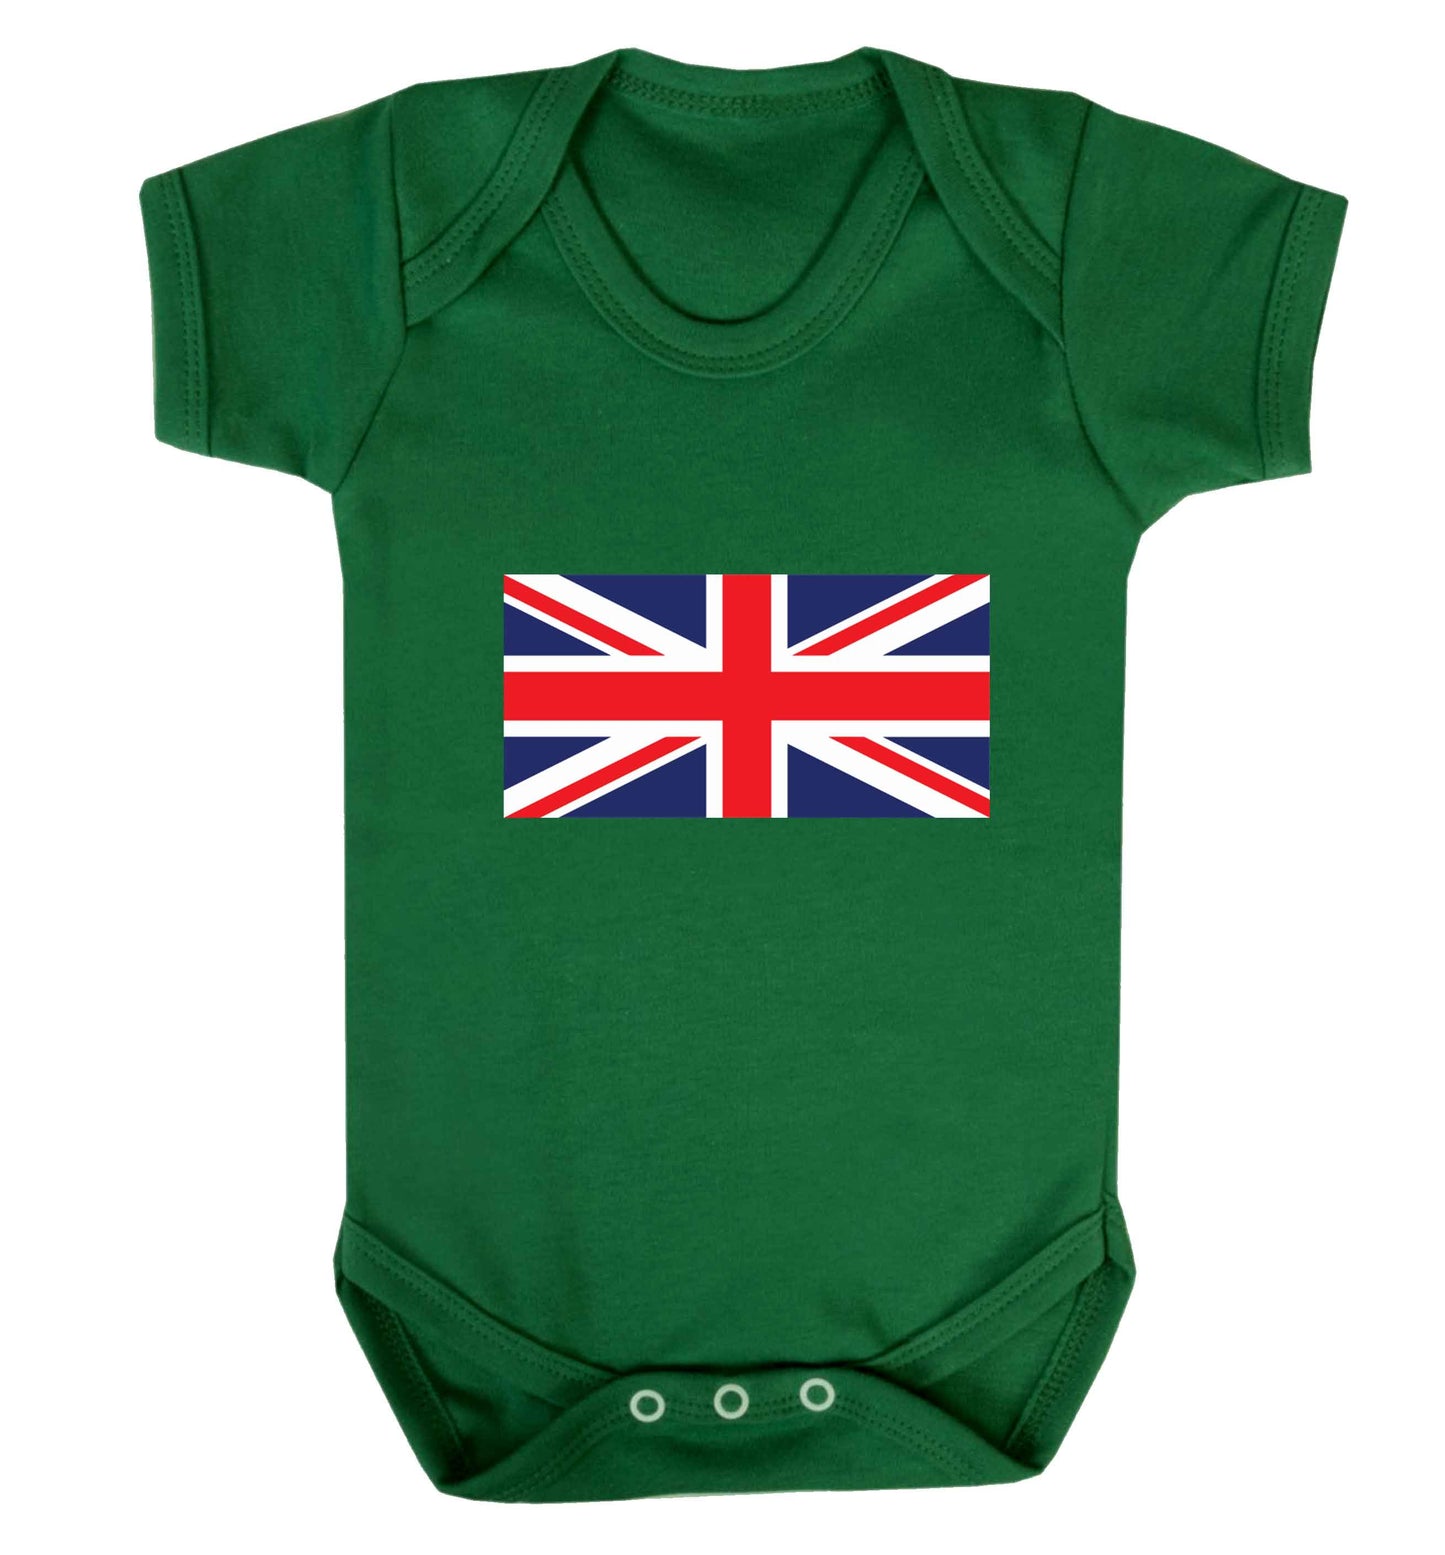 Union Jack baby vest green 18-24 months